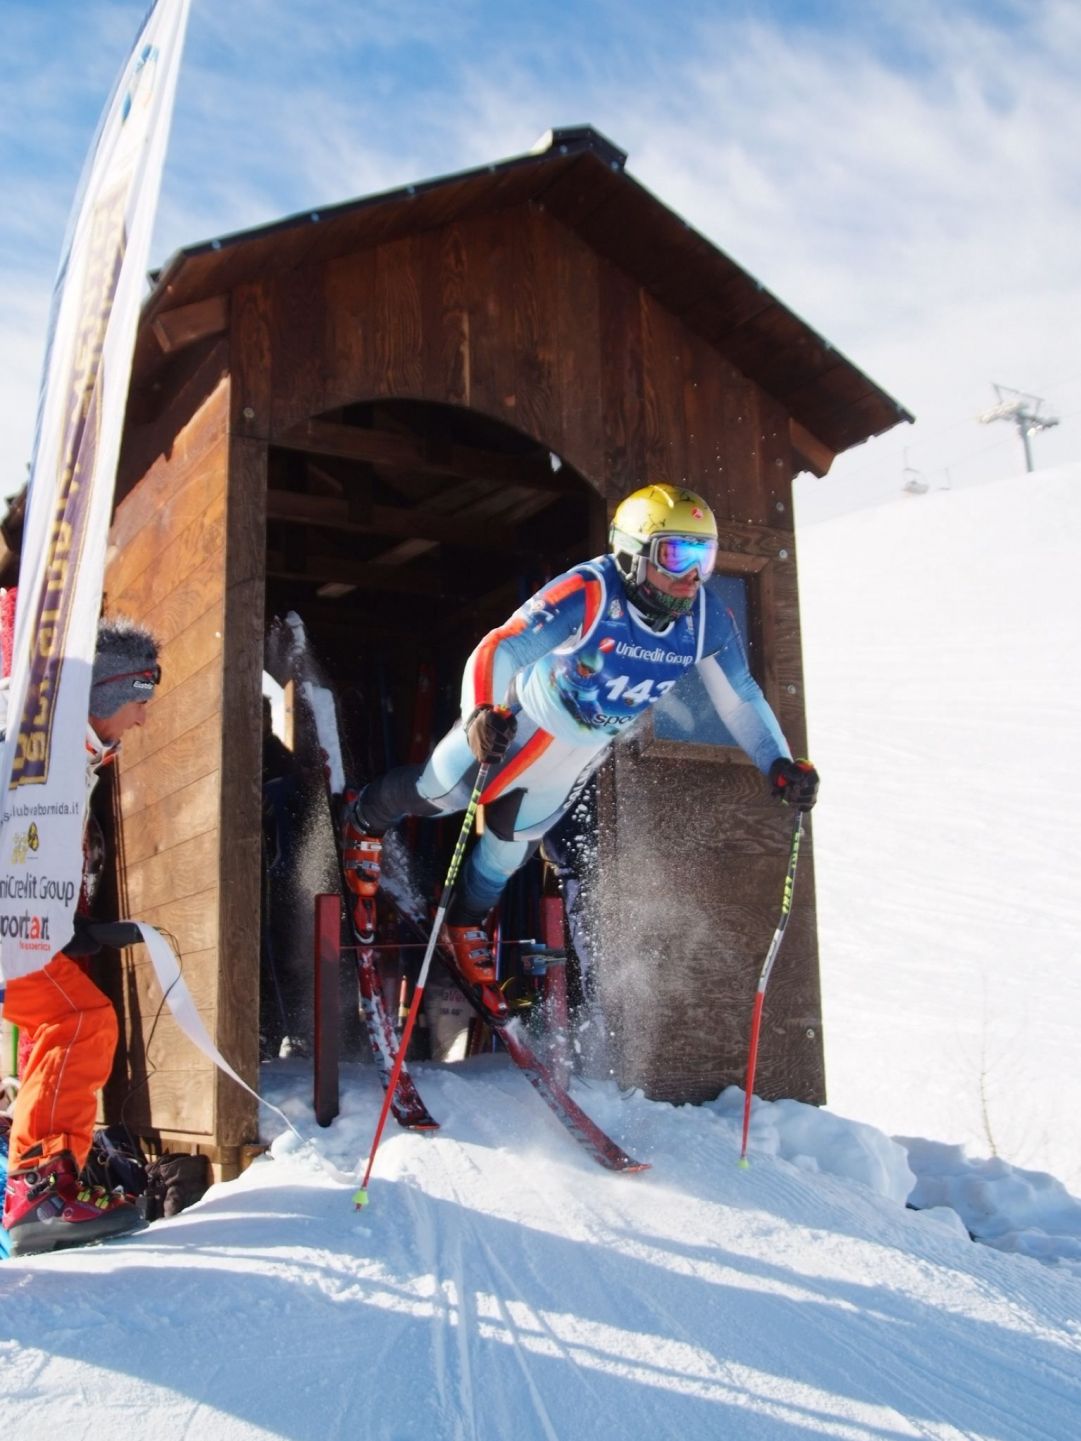 Artesina FIS Giant Slalom
Skier: Andrea Bergamasco